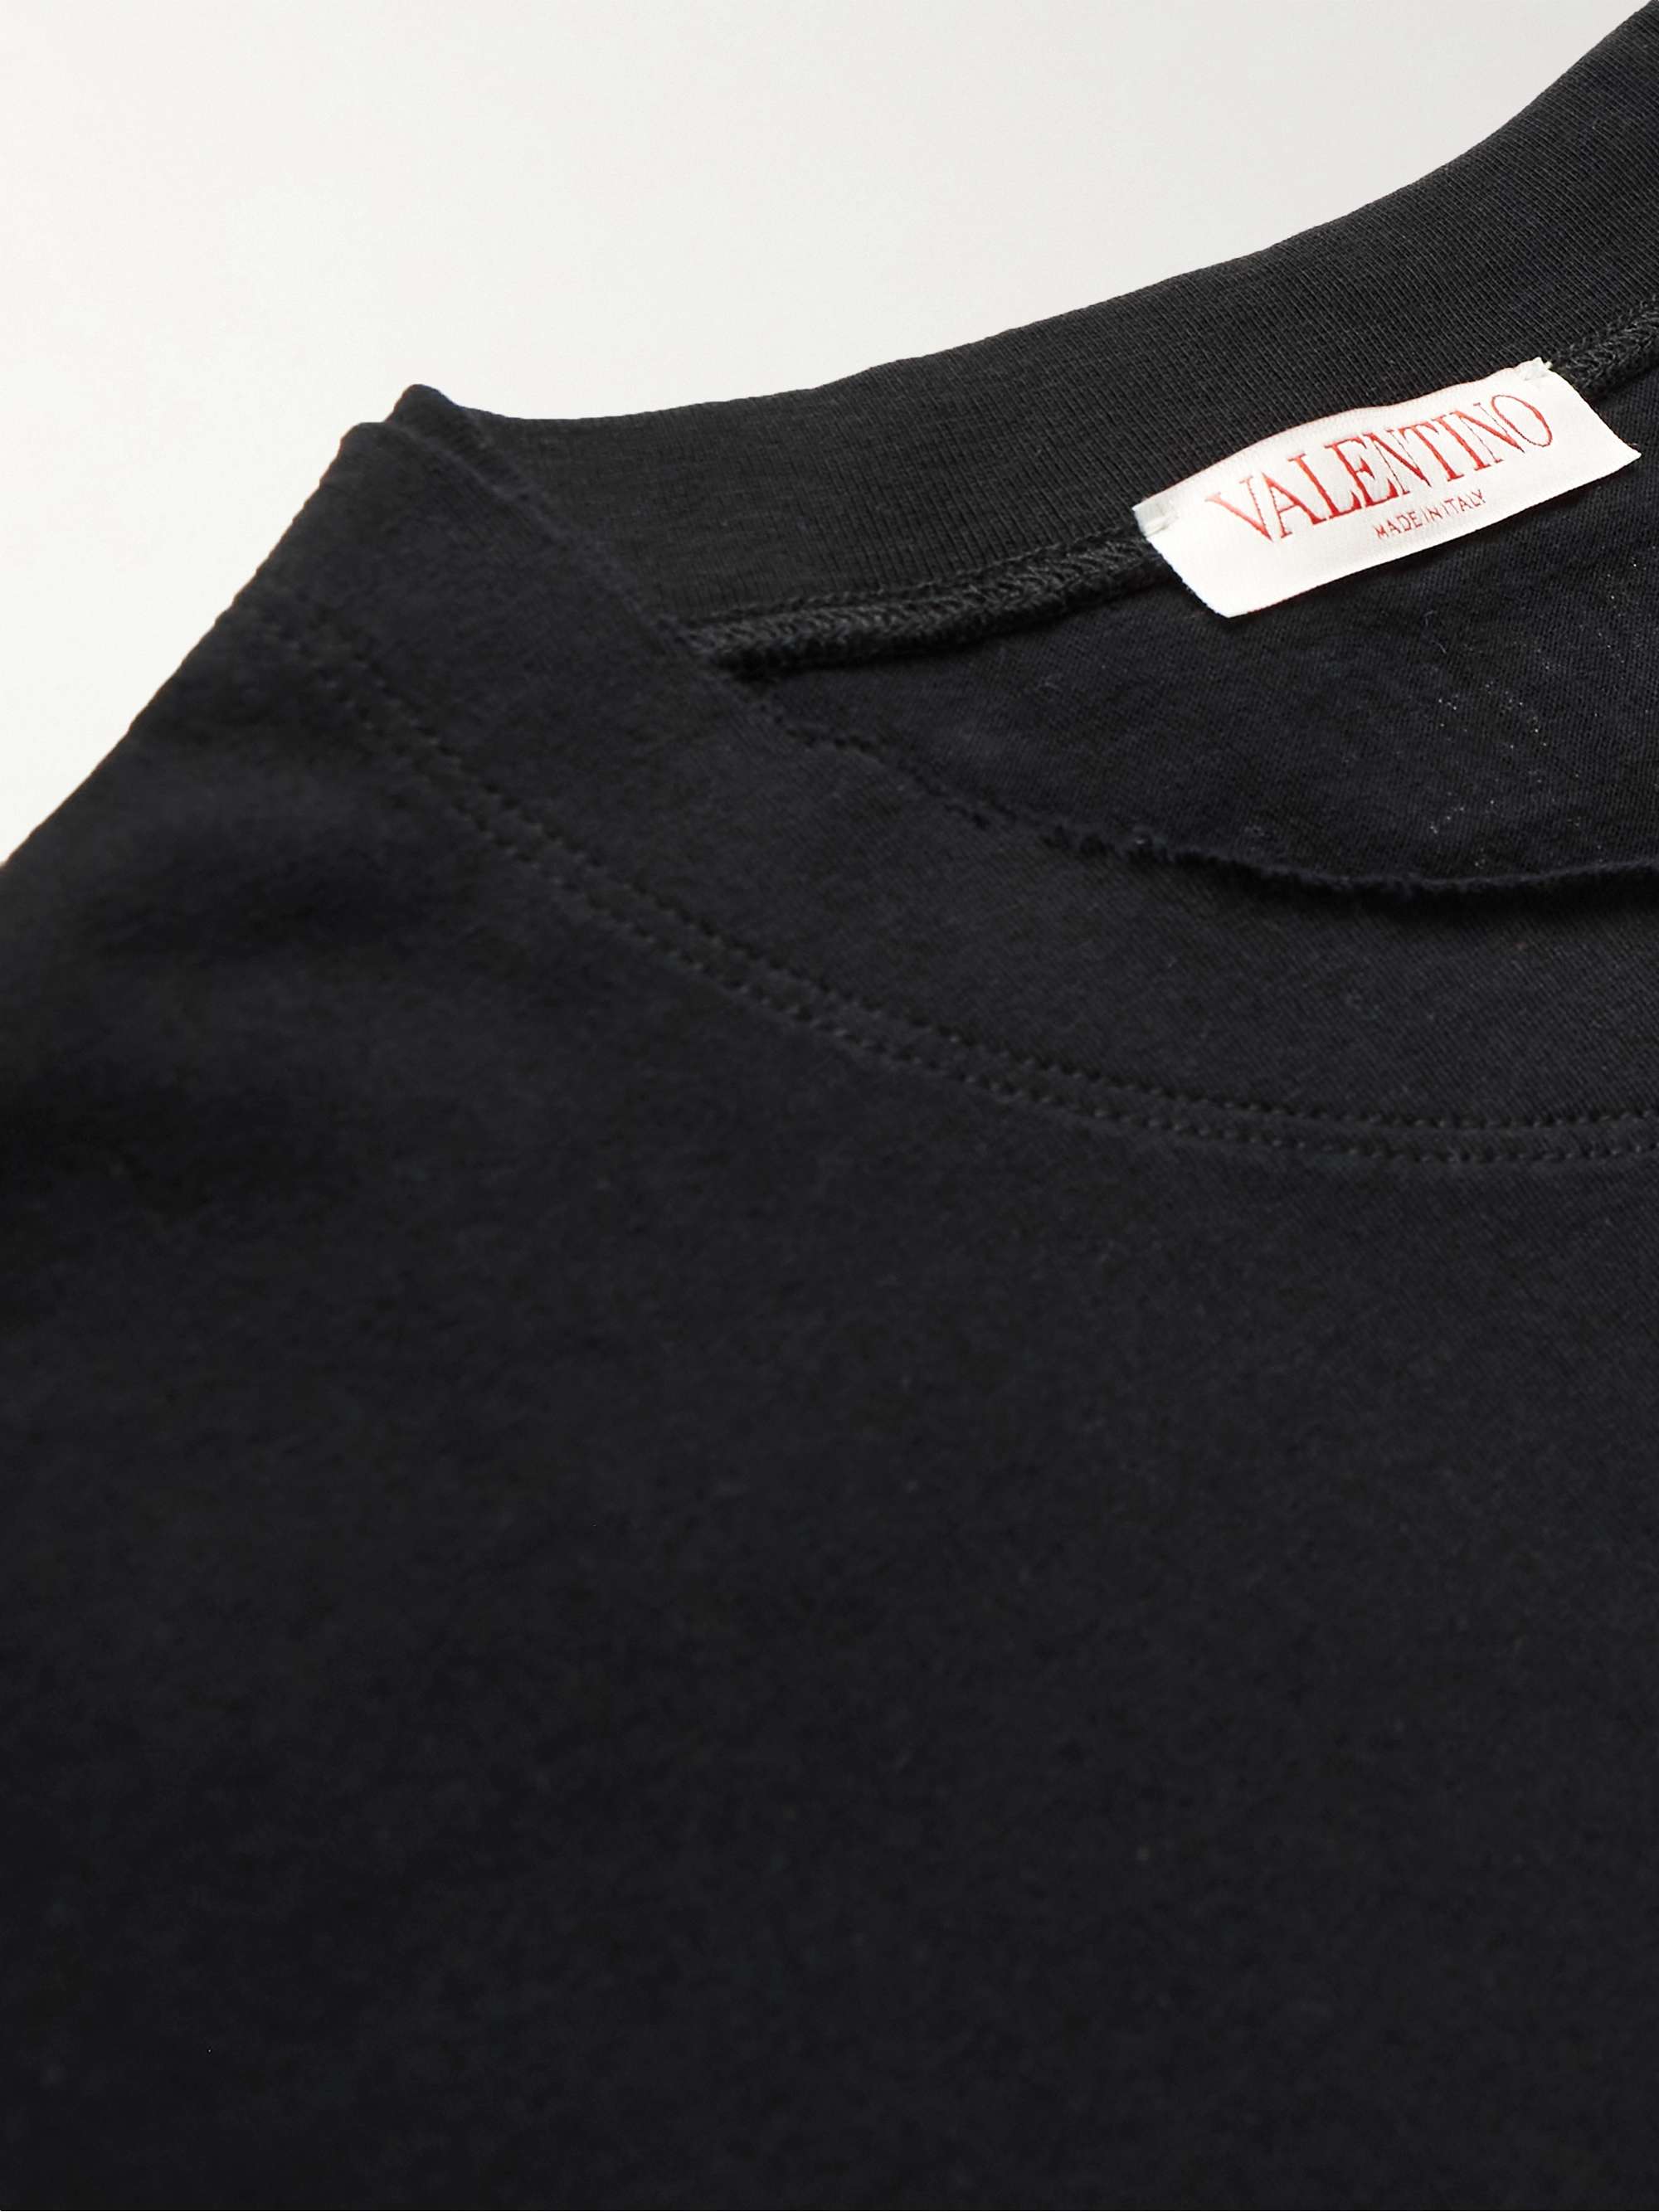 VALENTINO Distressed Logo-Print Cotton-Jersey T-Shirt